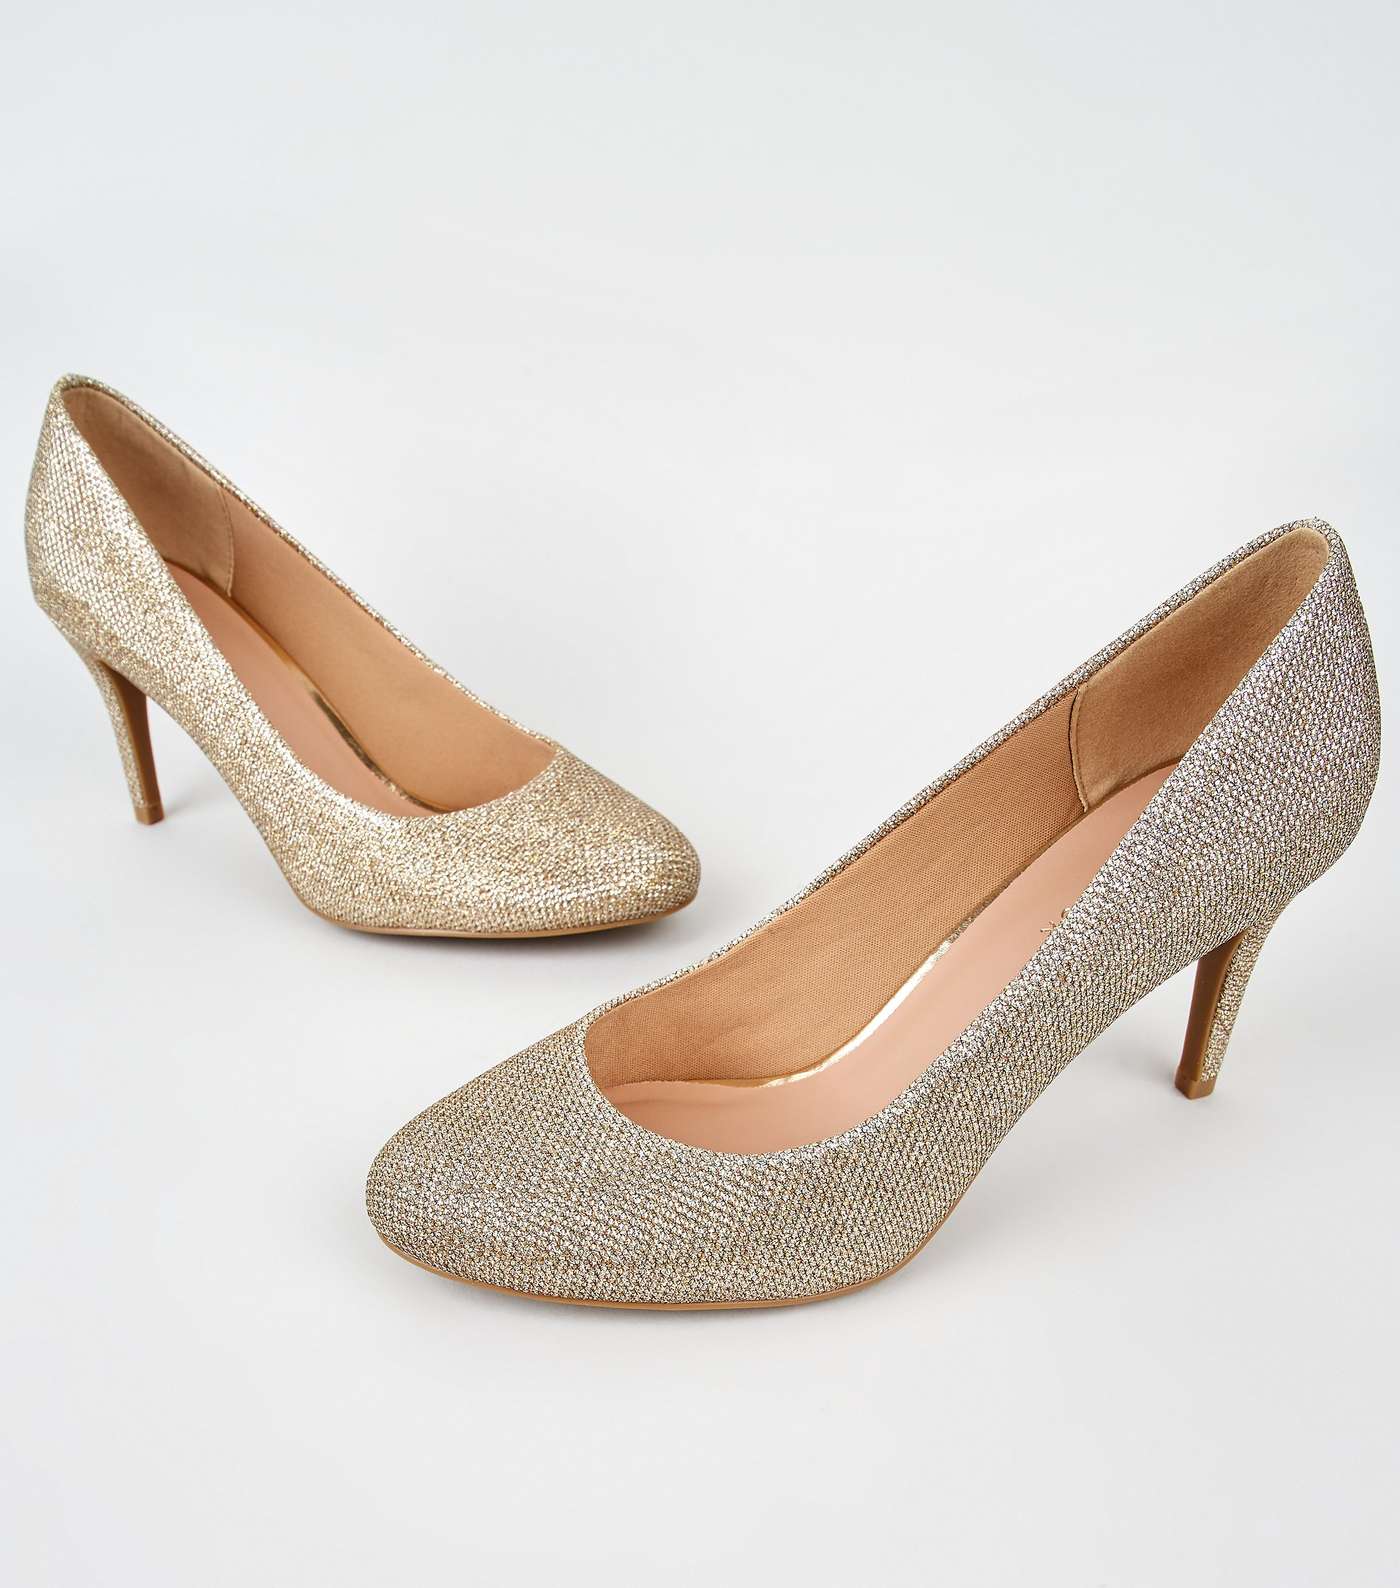 Gold Glitter Stiletto Heel Court Shoes Image 4